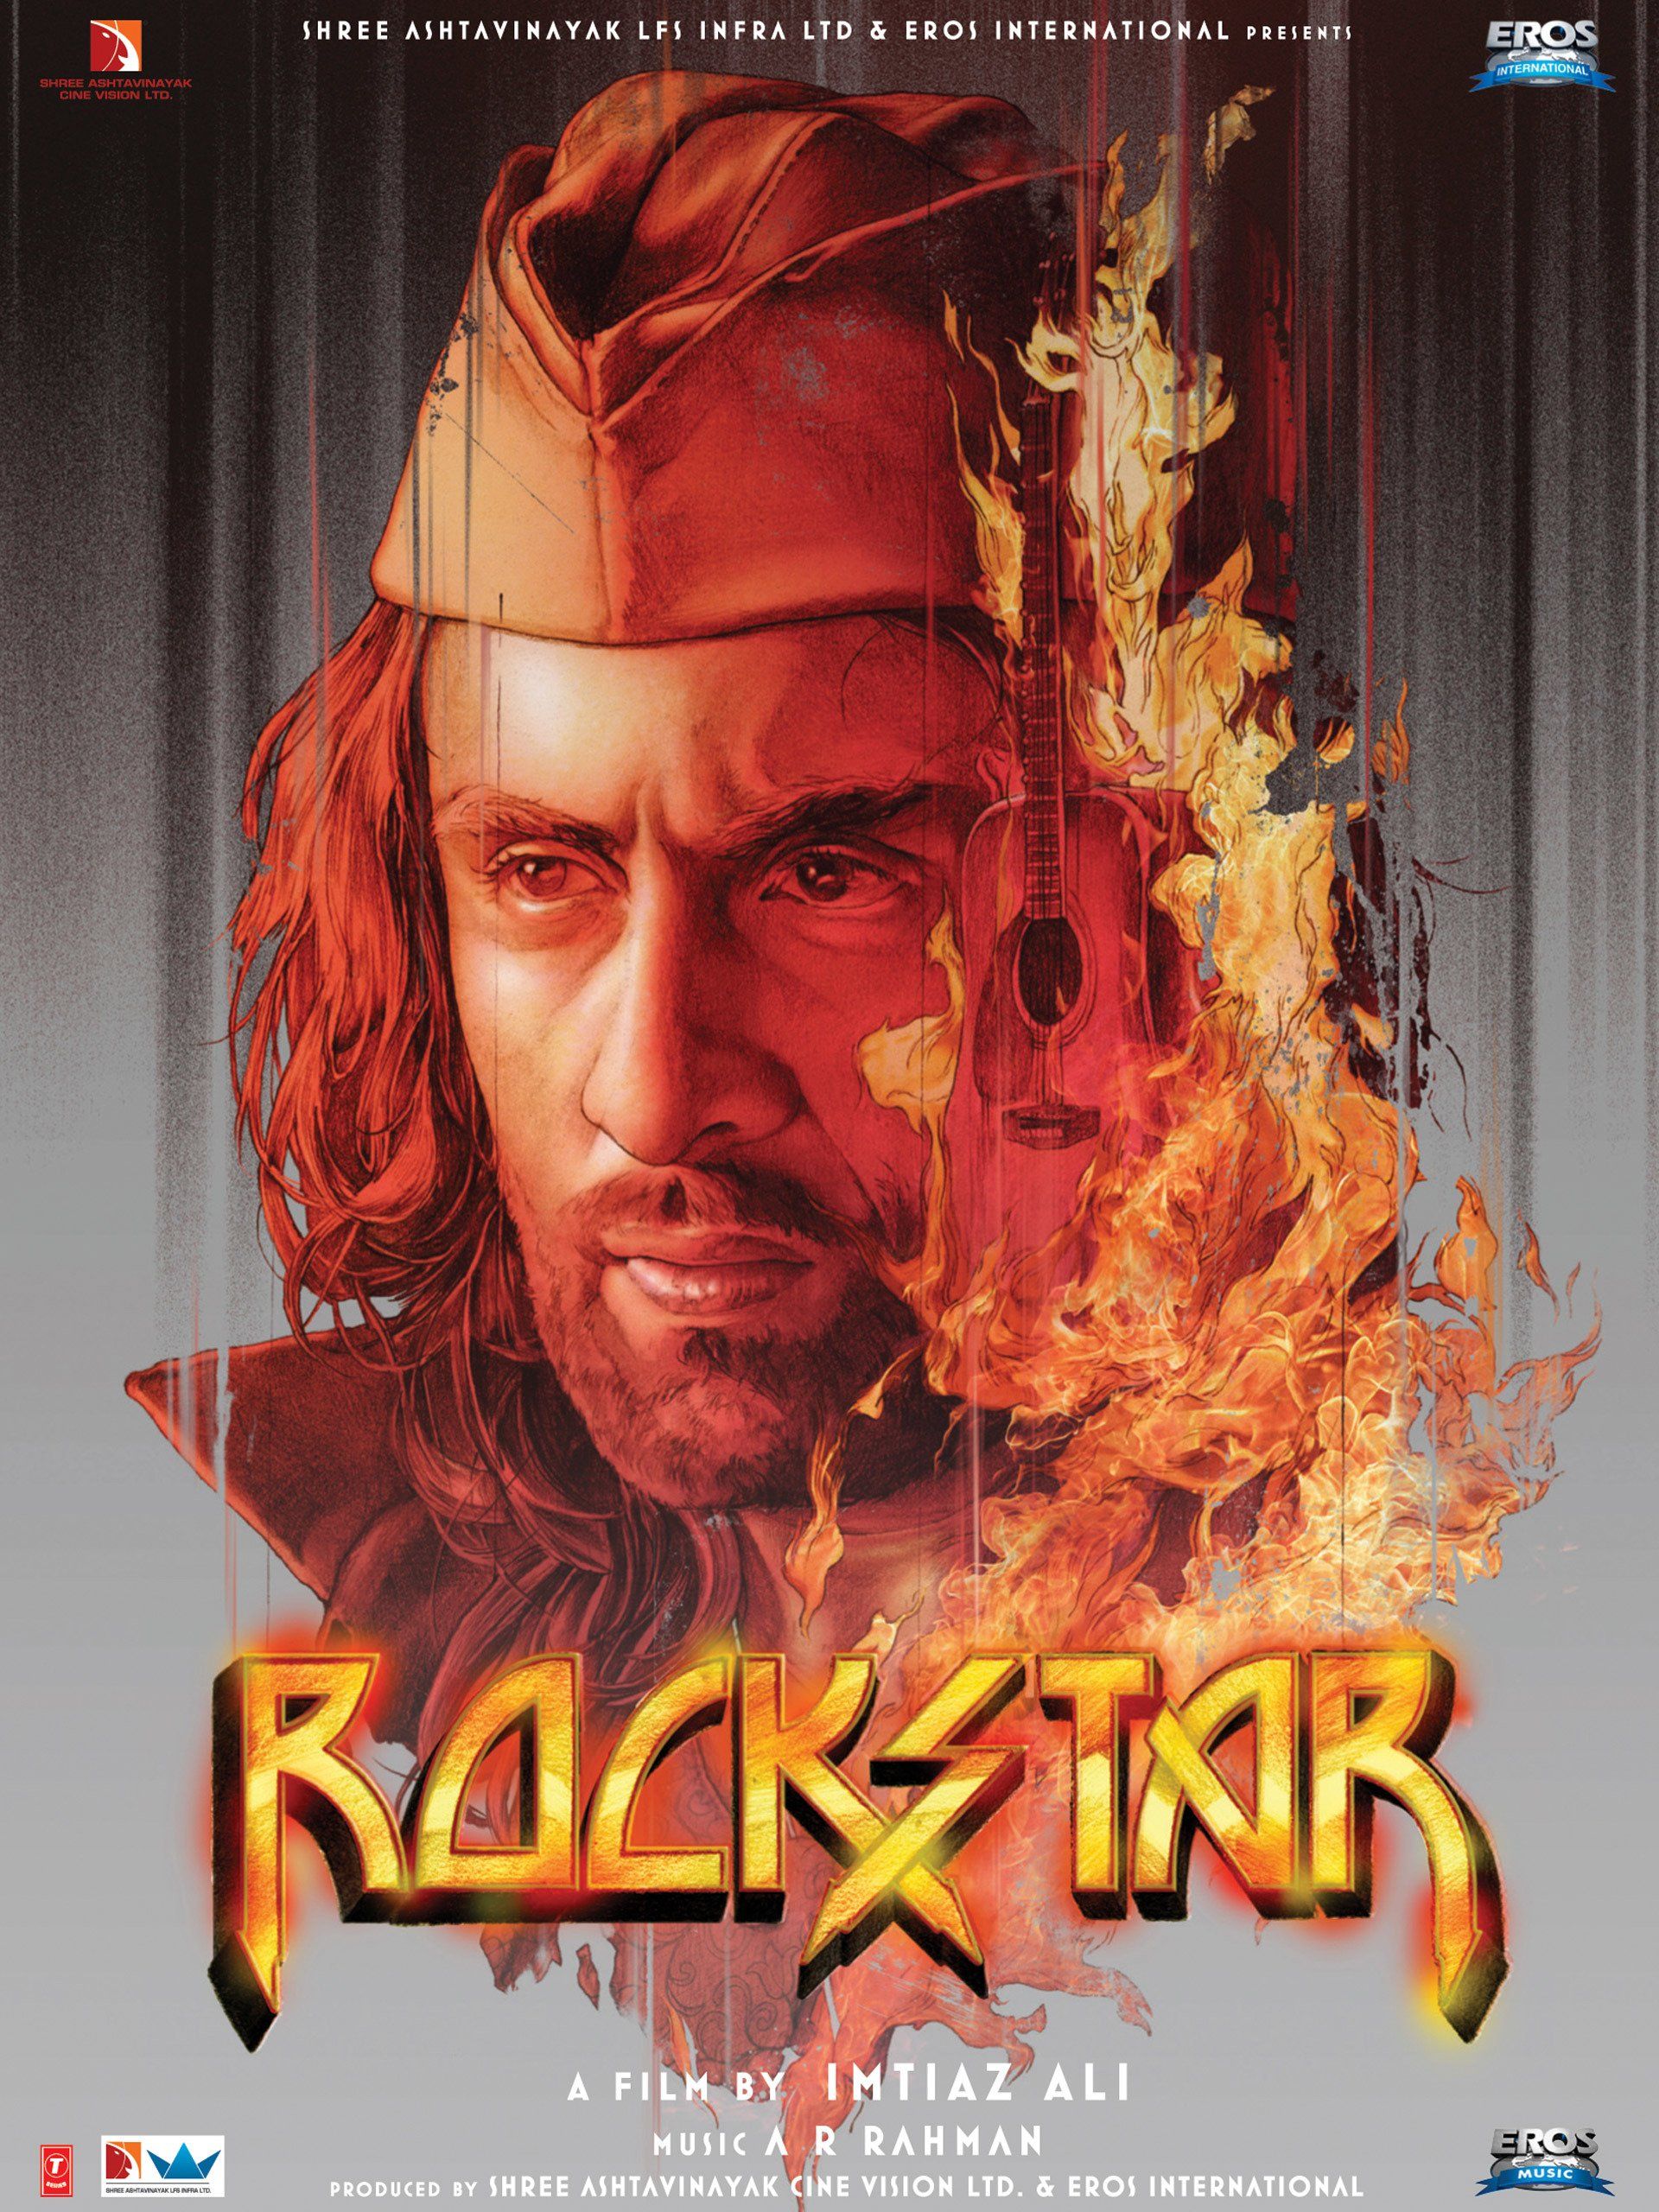 rockstar full movie watch online free in hd download